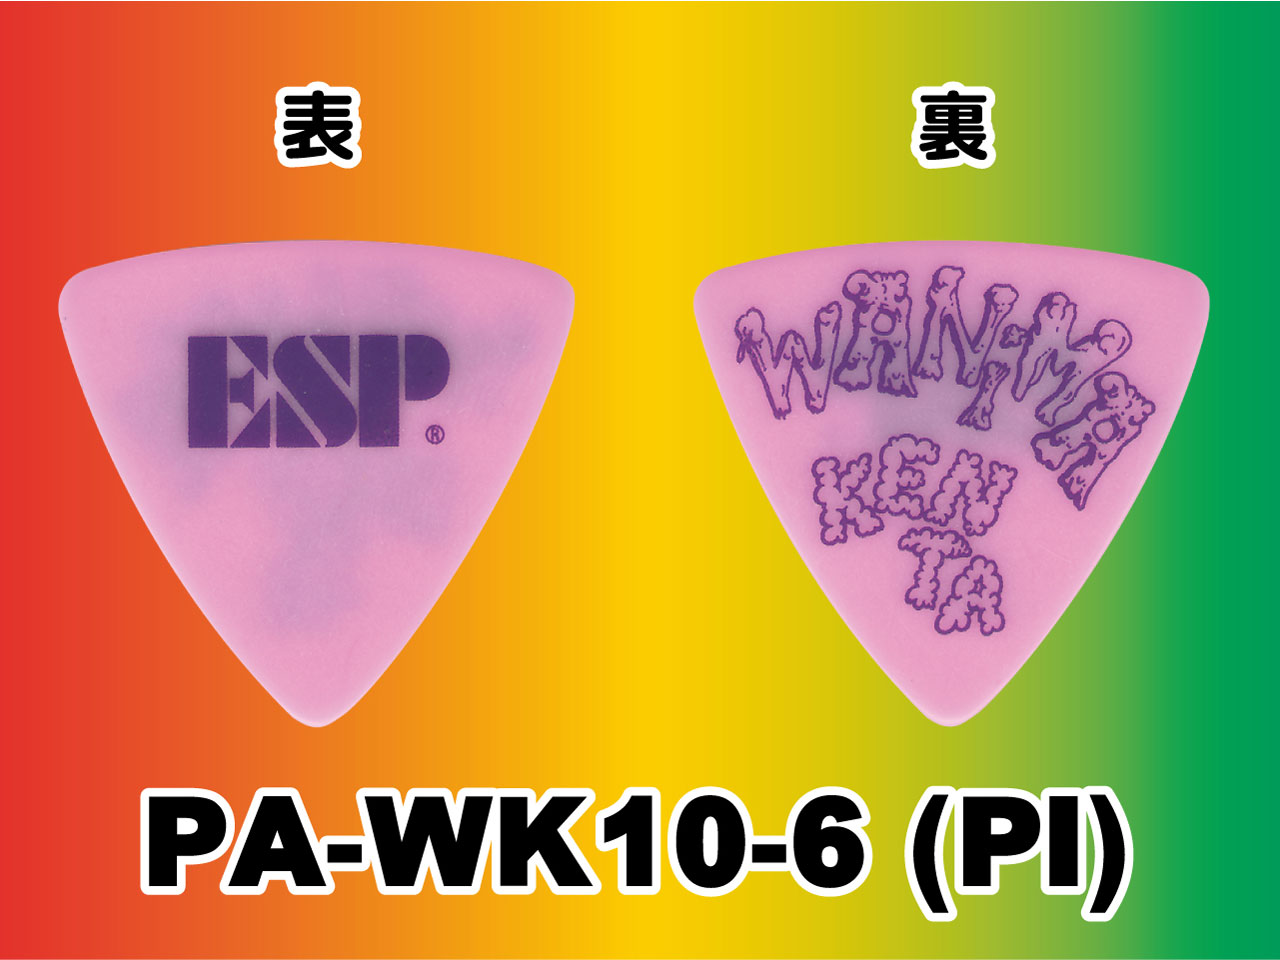 ESP(イーエスピー) Artist Pick Series KENTA Pick フルセット全8種 